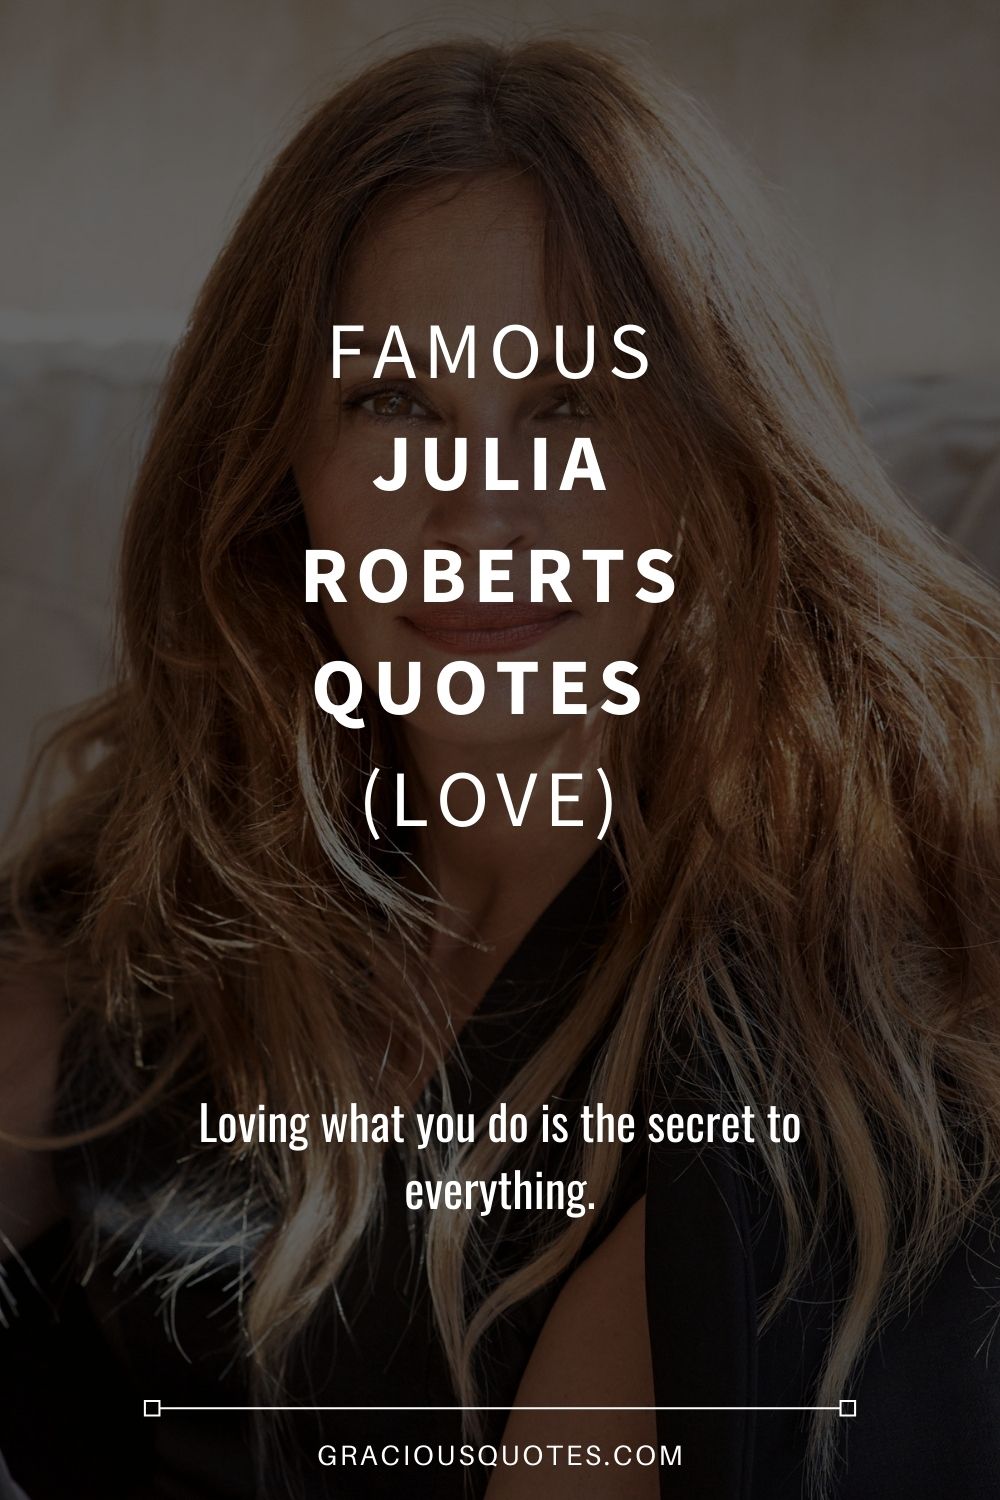 Famous Julia Roberts Quotes (LOVE) - Gracious Quotes